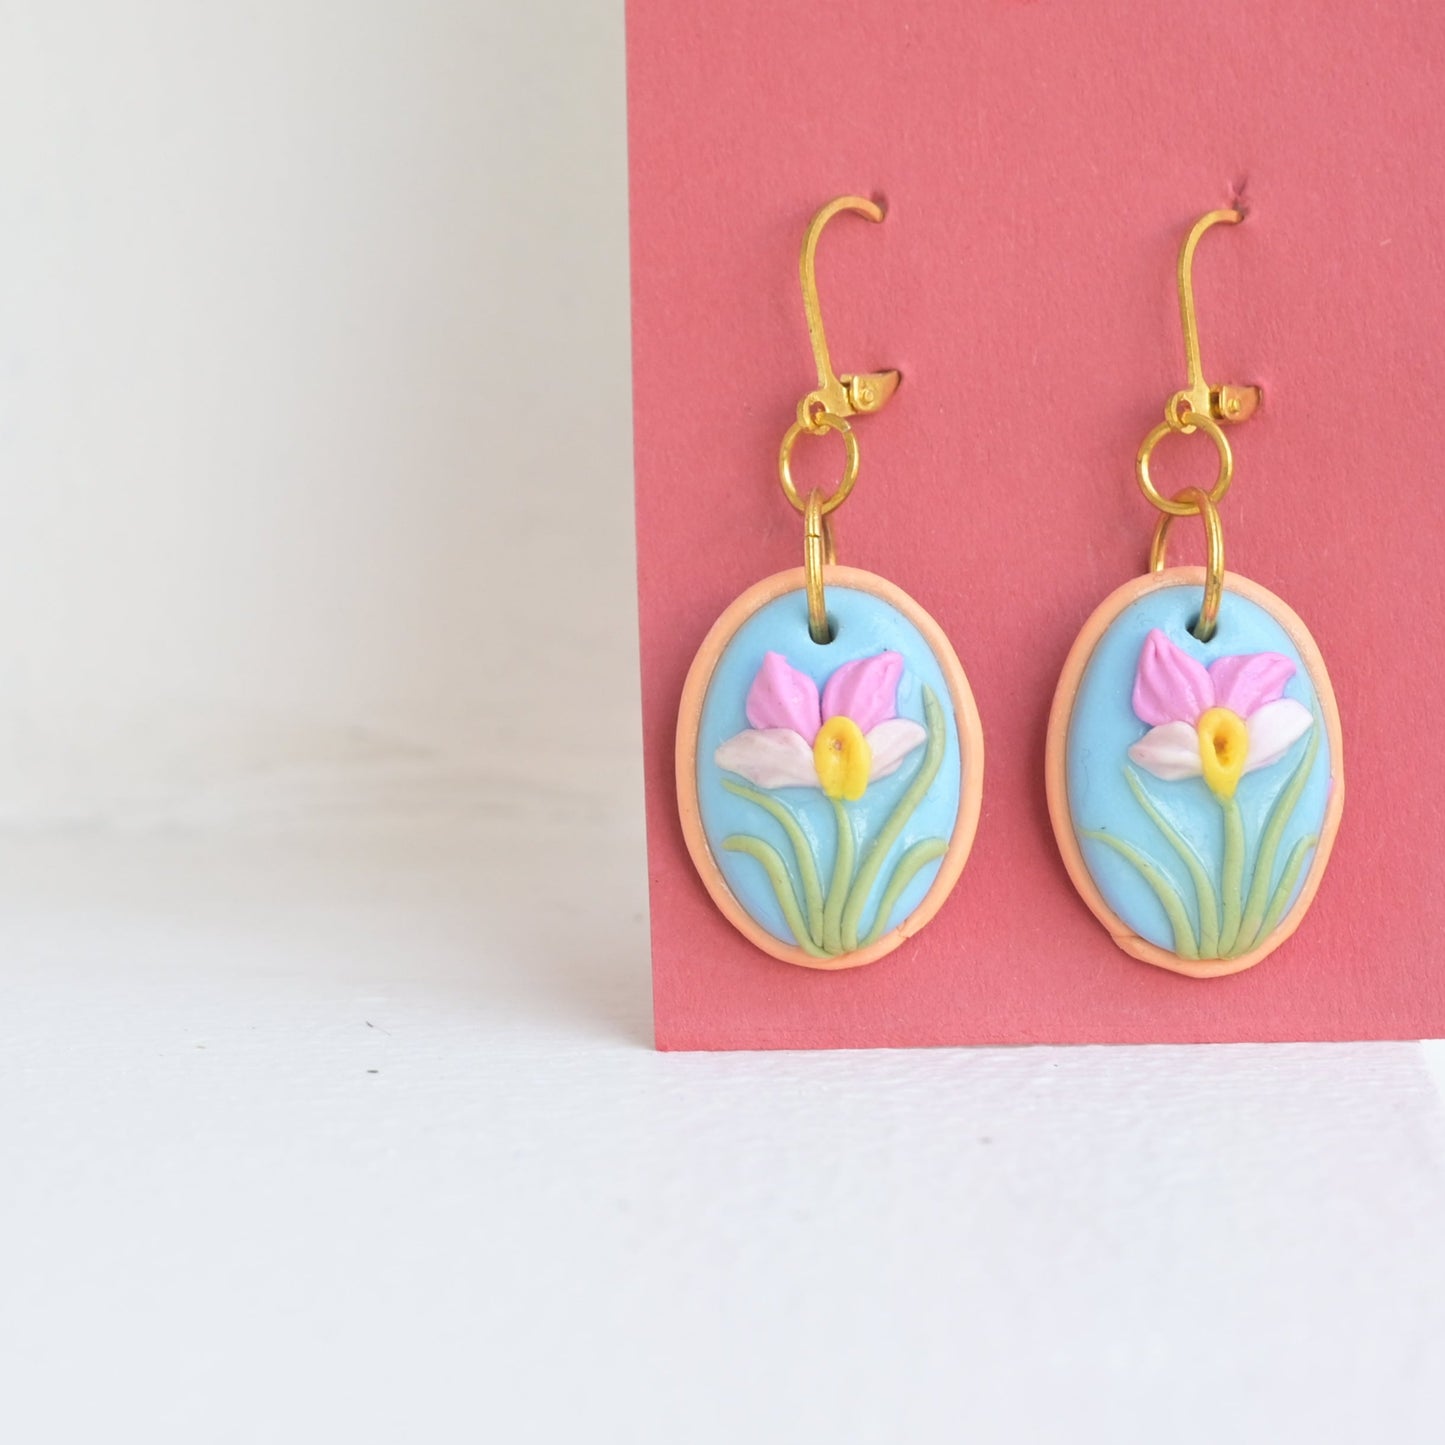 Hannah Lim: Oval Orchid Earrings